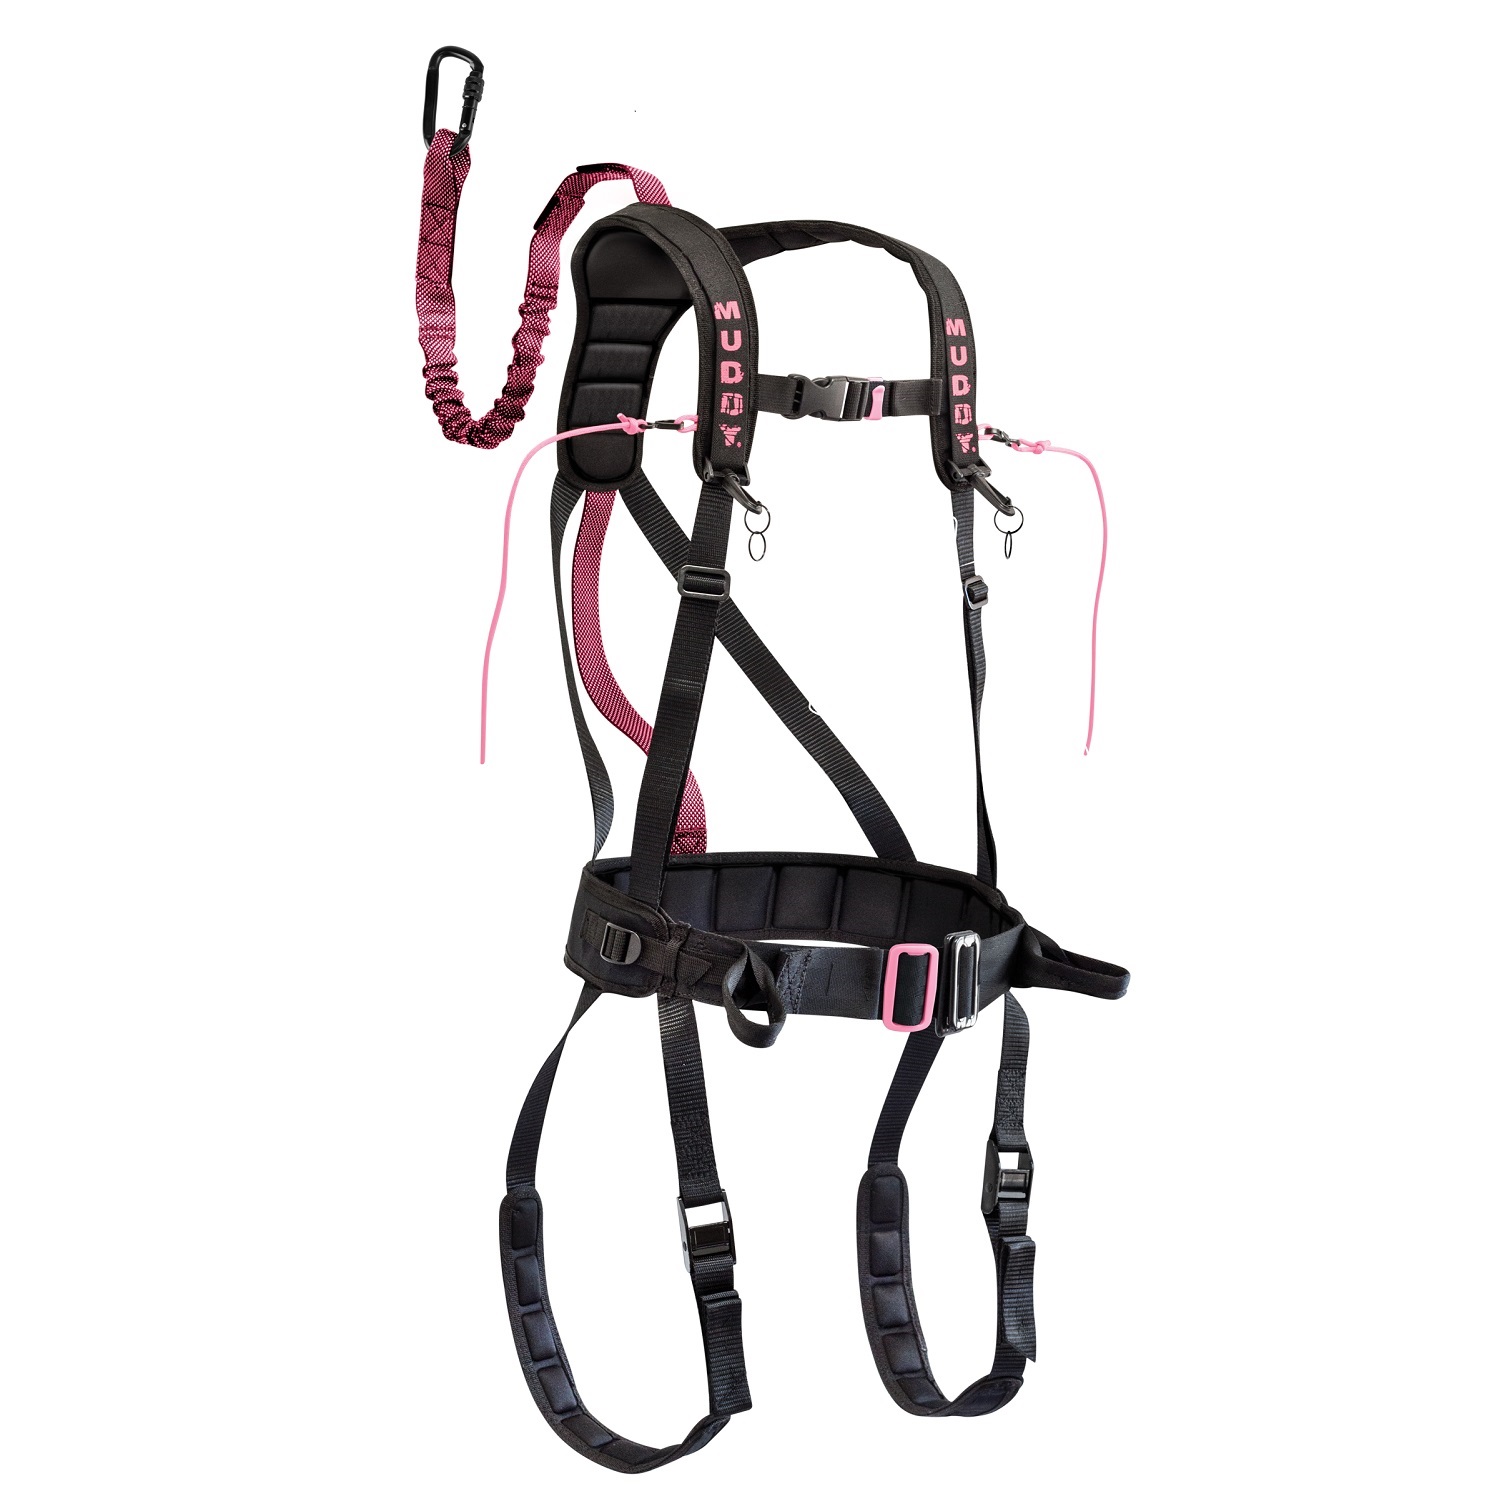 Muddy Safeguard Harness - Pink S/m - Msh405-sm